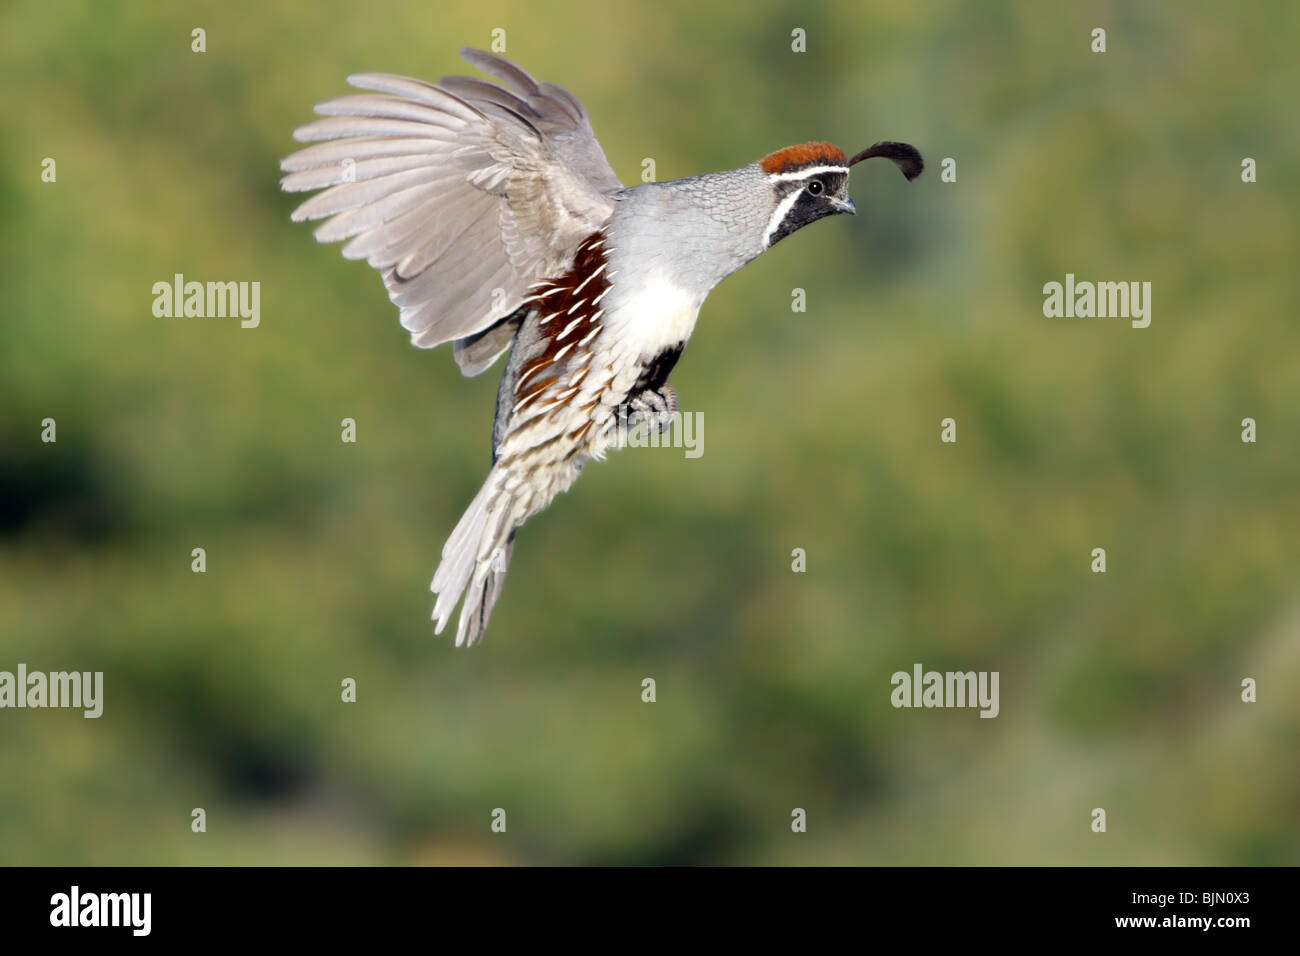 flying quail clipart